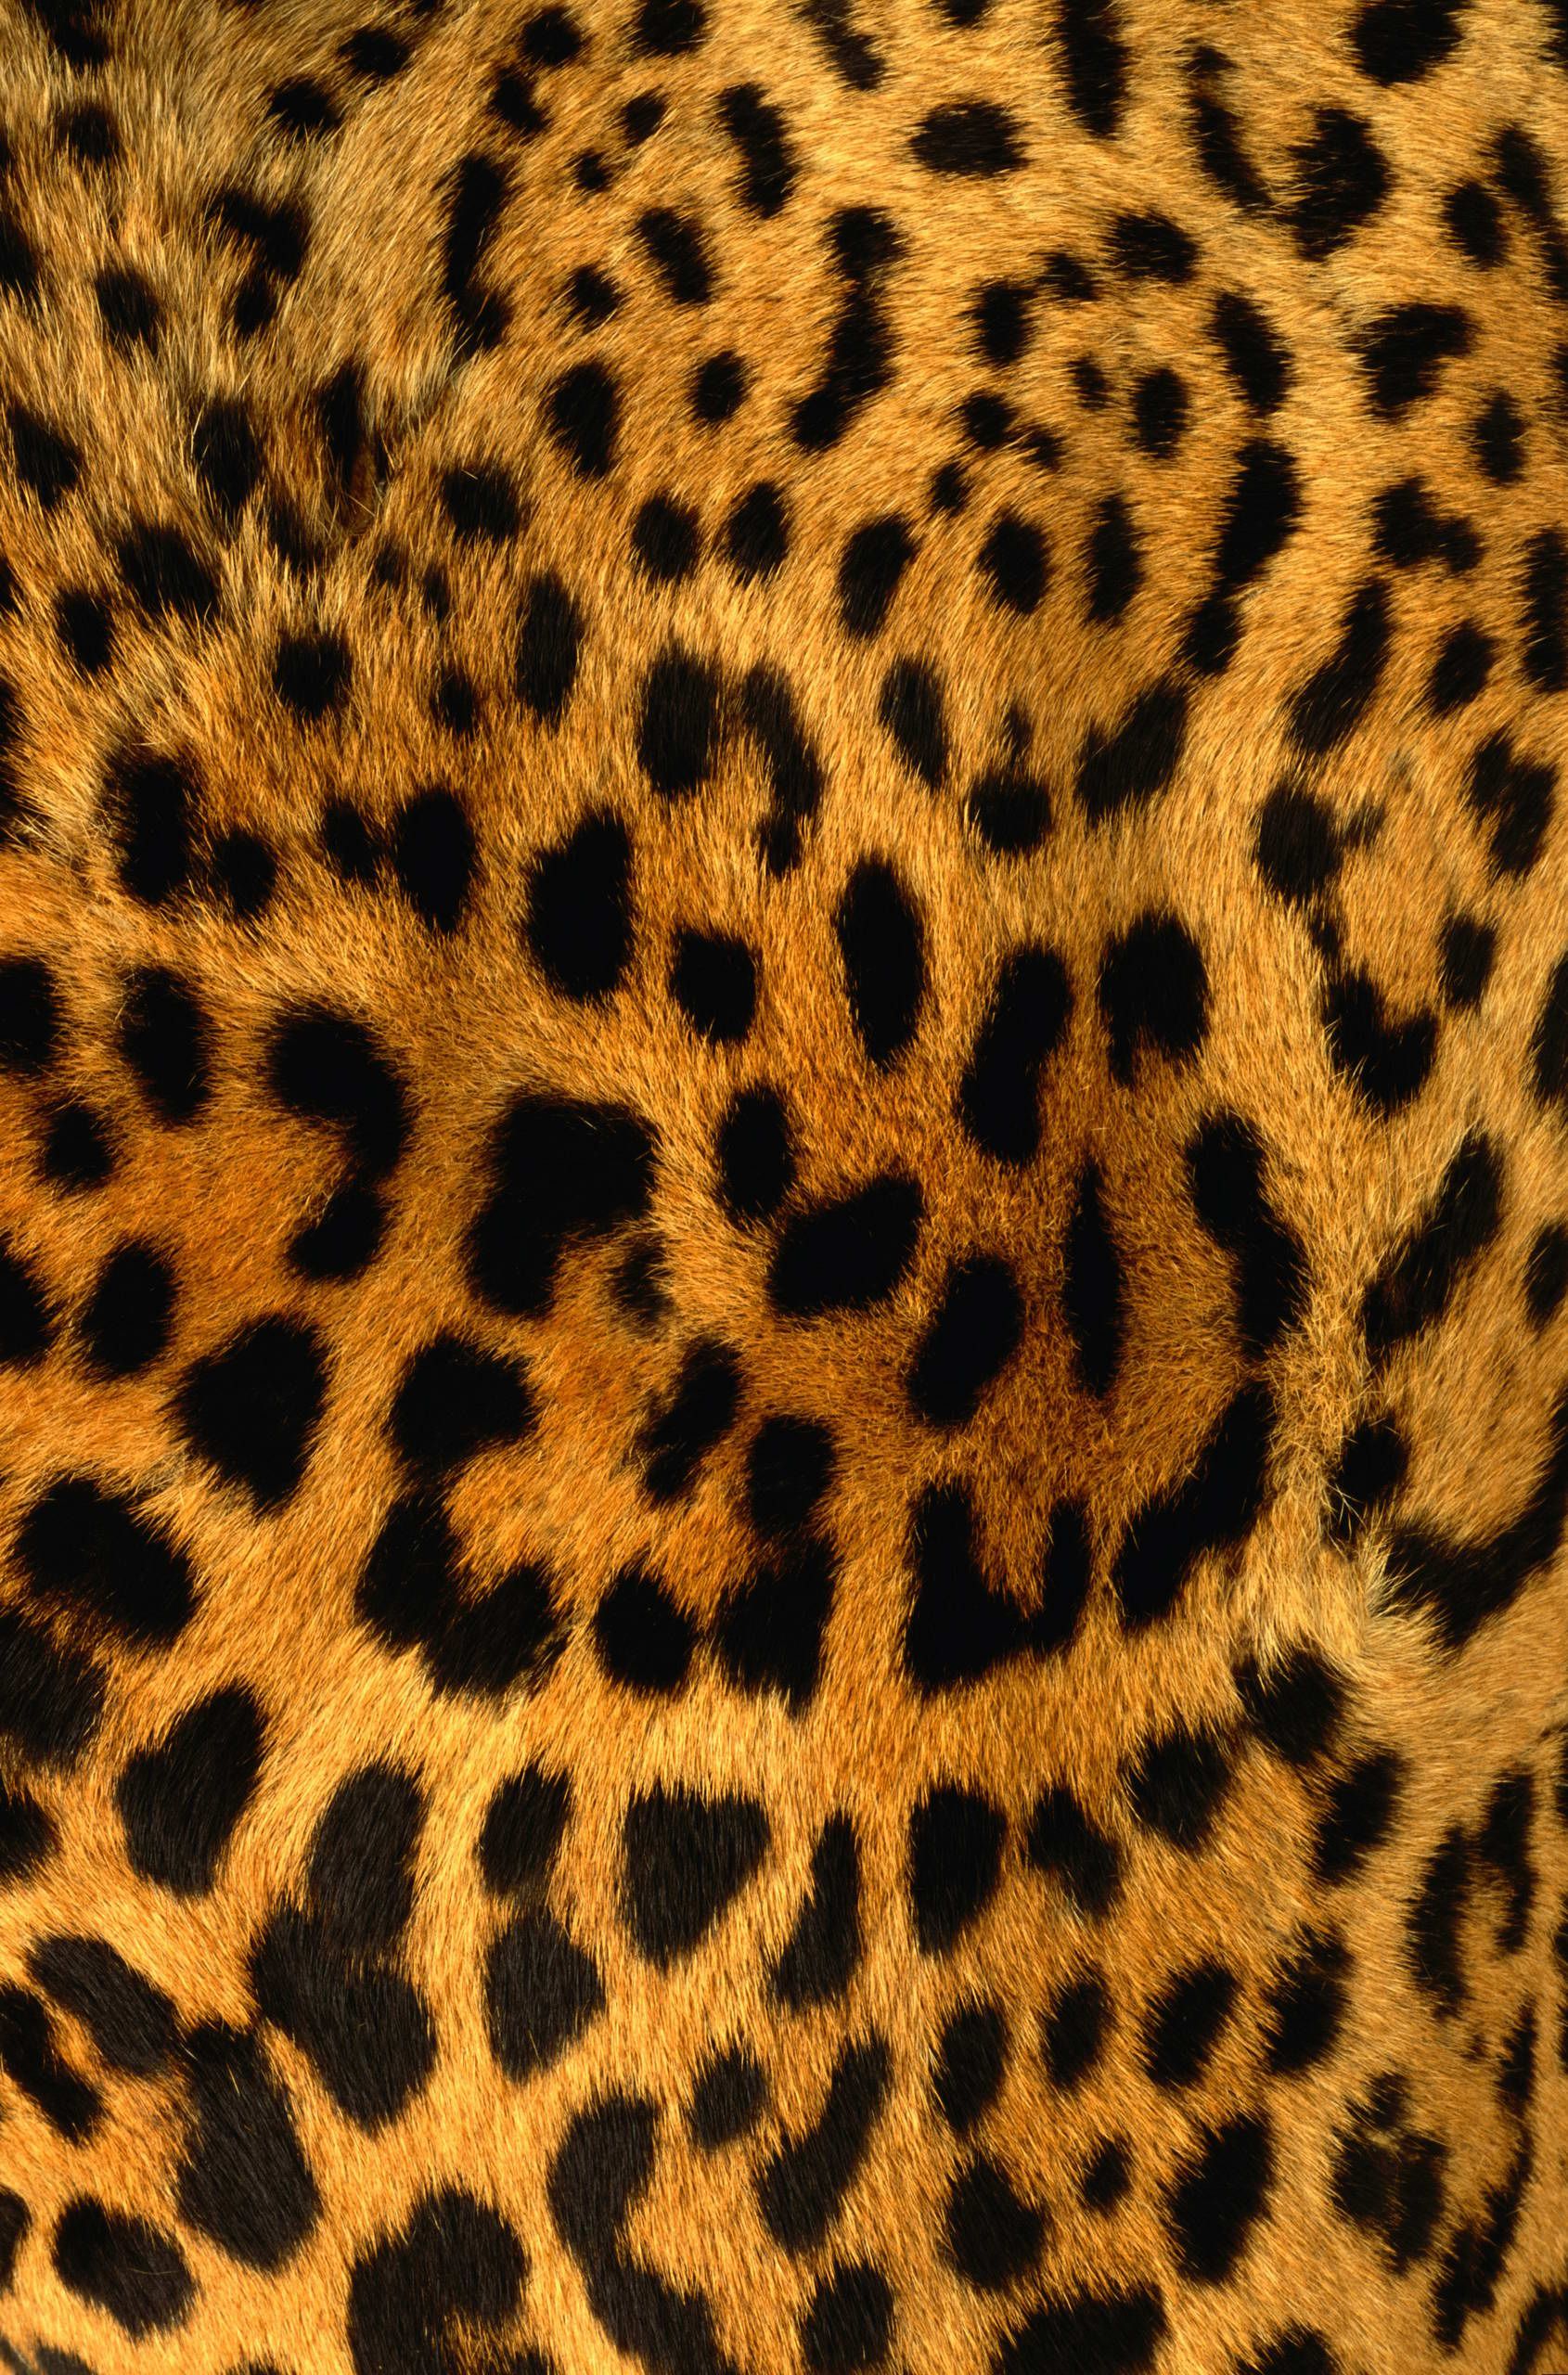 Leopard Skin Texture | Digital Fashion Illustration | Pinterest ...